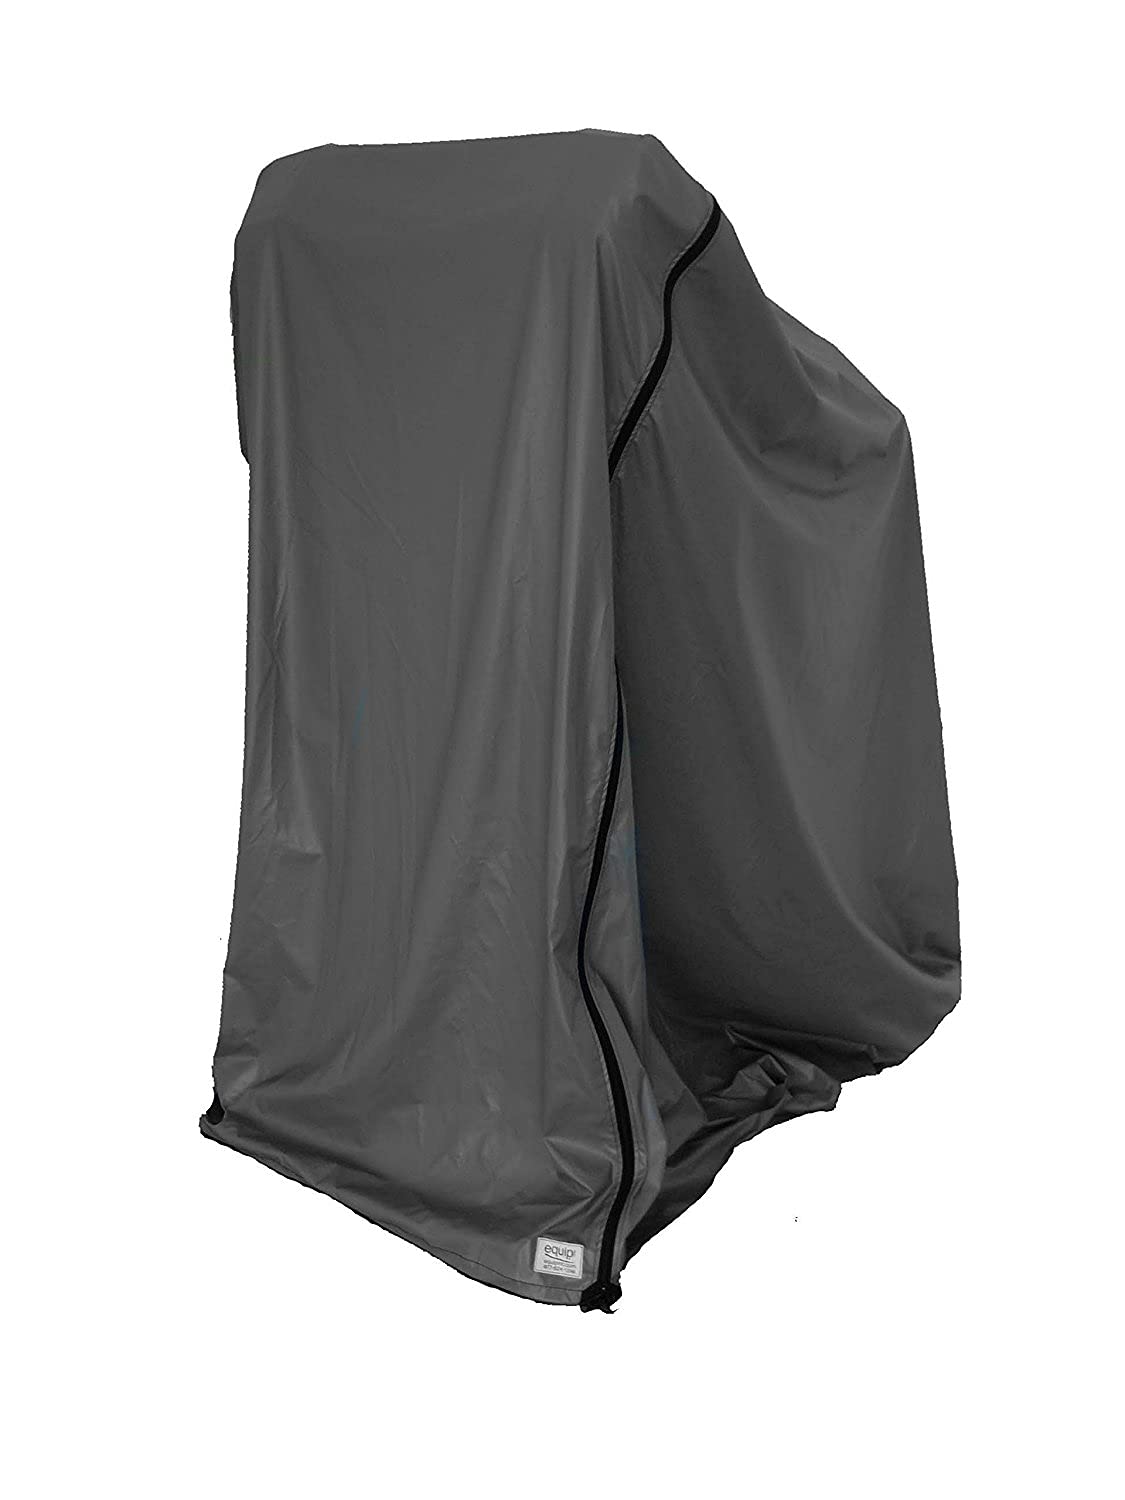 Equip, Inc Protective cover for Folding Treadmill Platform Heavy Duty IndoorOutdoor cover (grey, Medium)